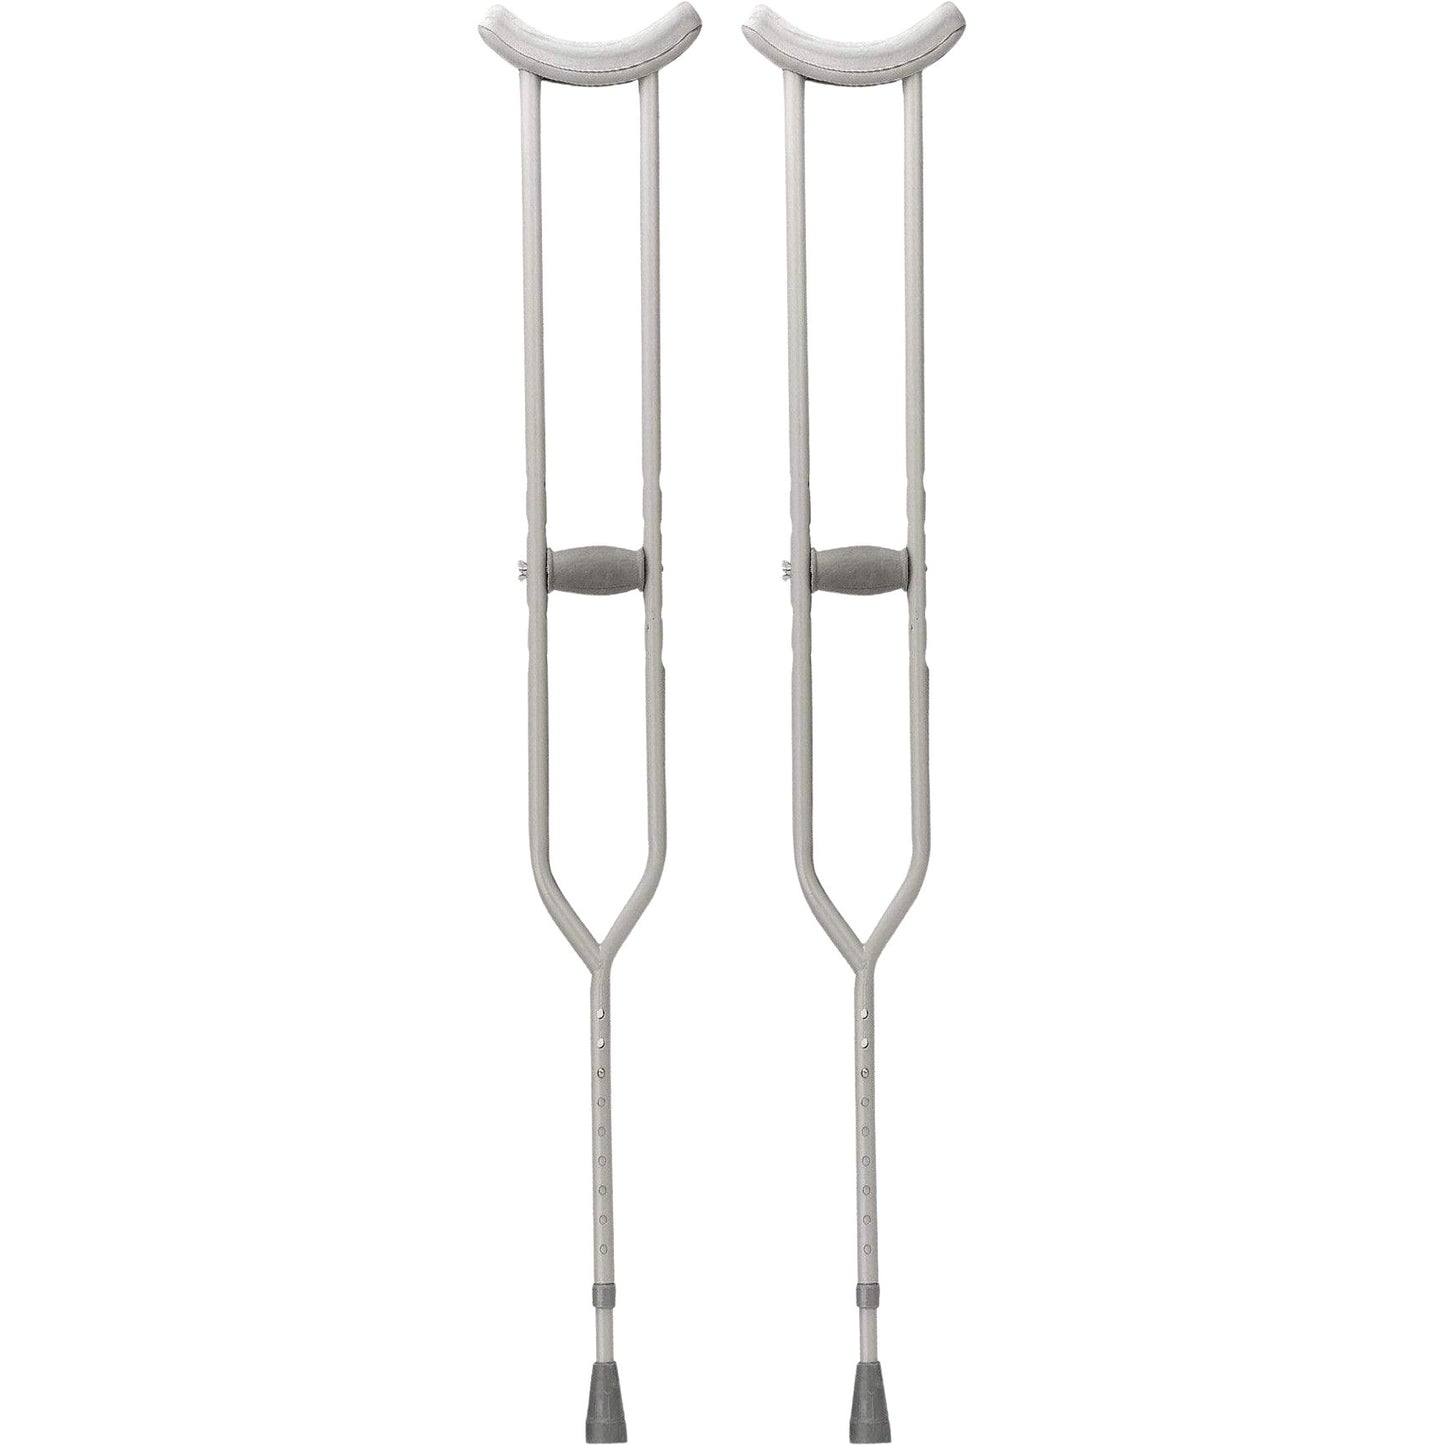 ConvaQuip Crutches Bariatric Underarm Crutch Model DR10406 by ConvaQuip